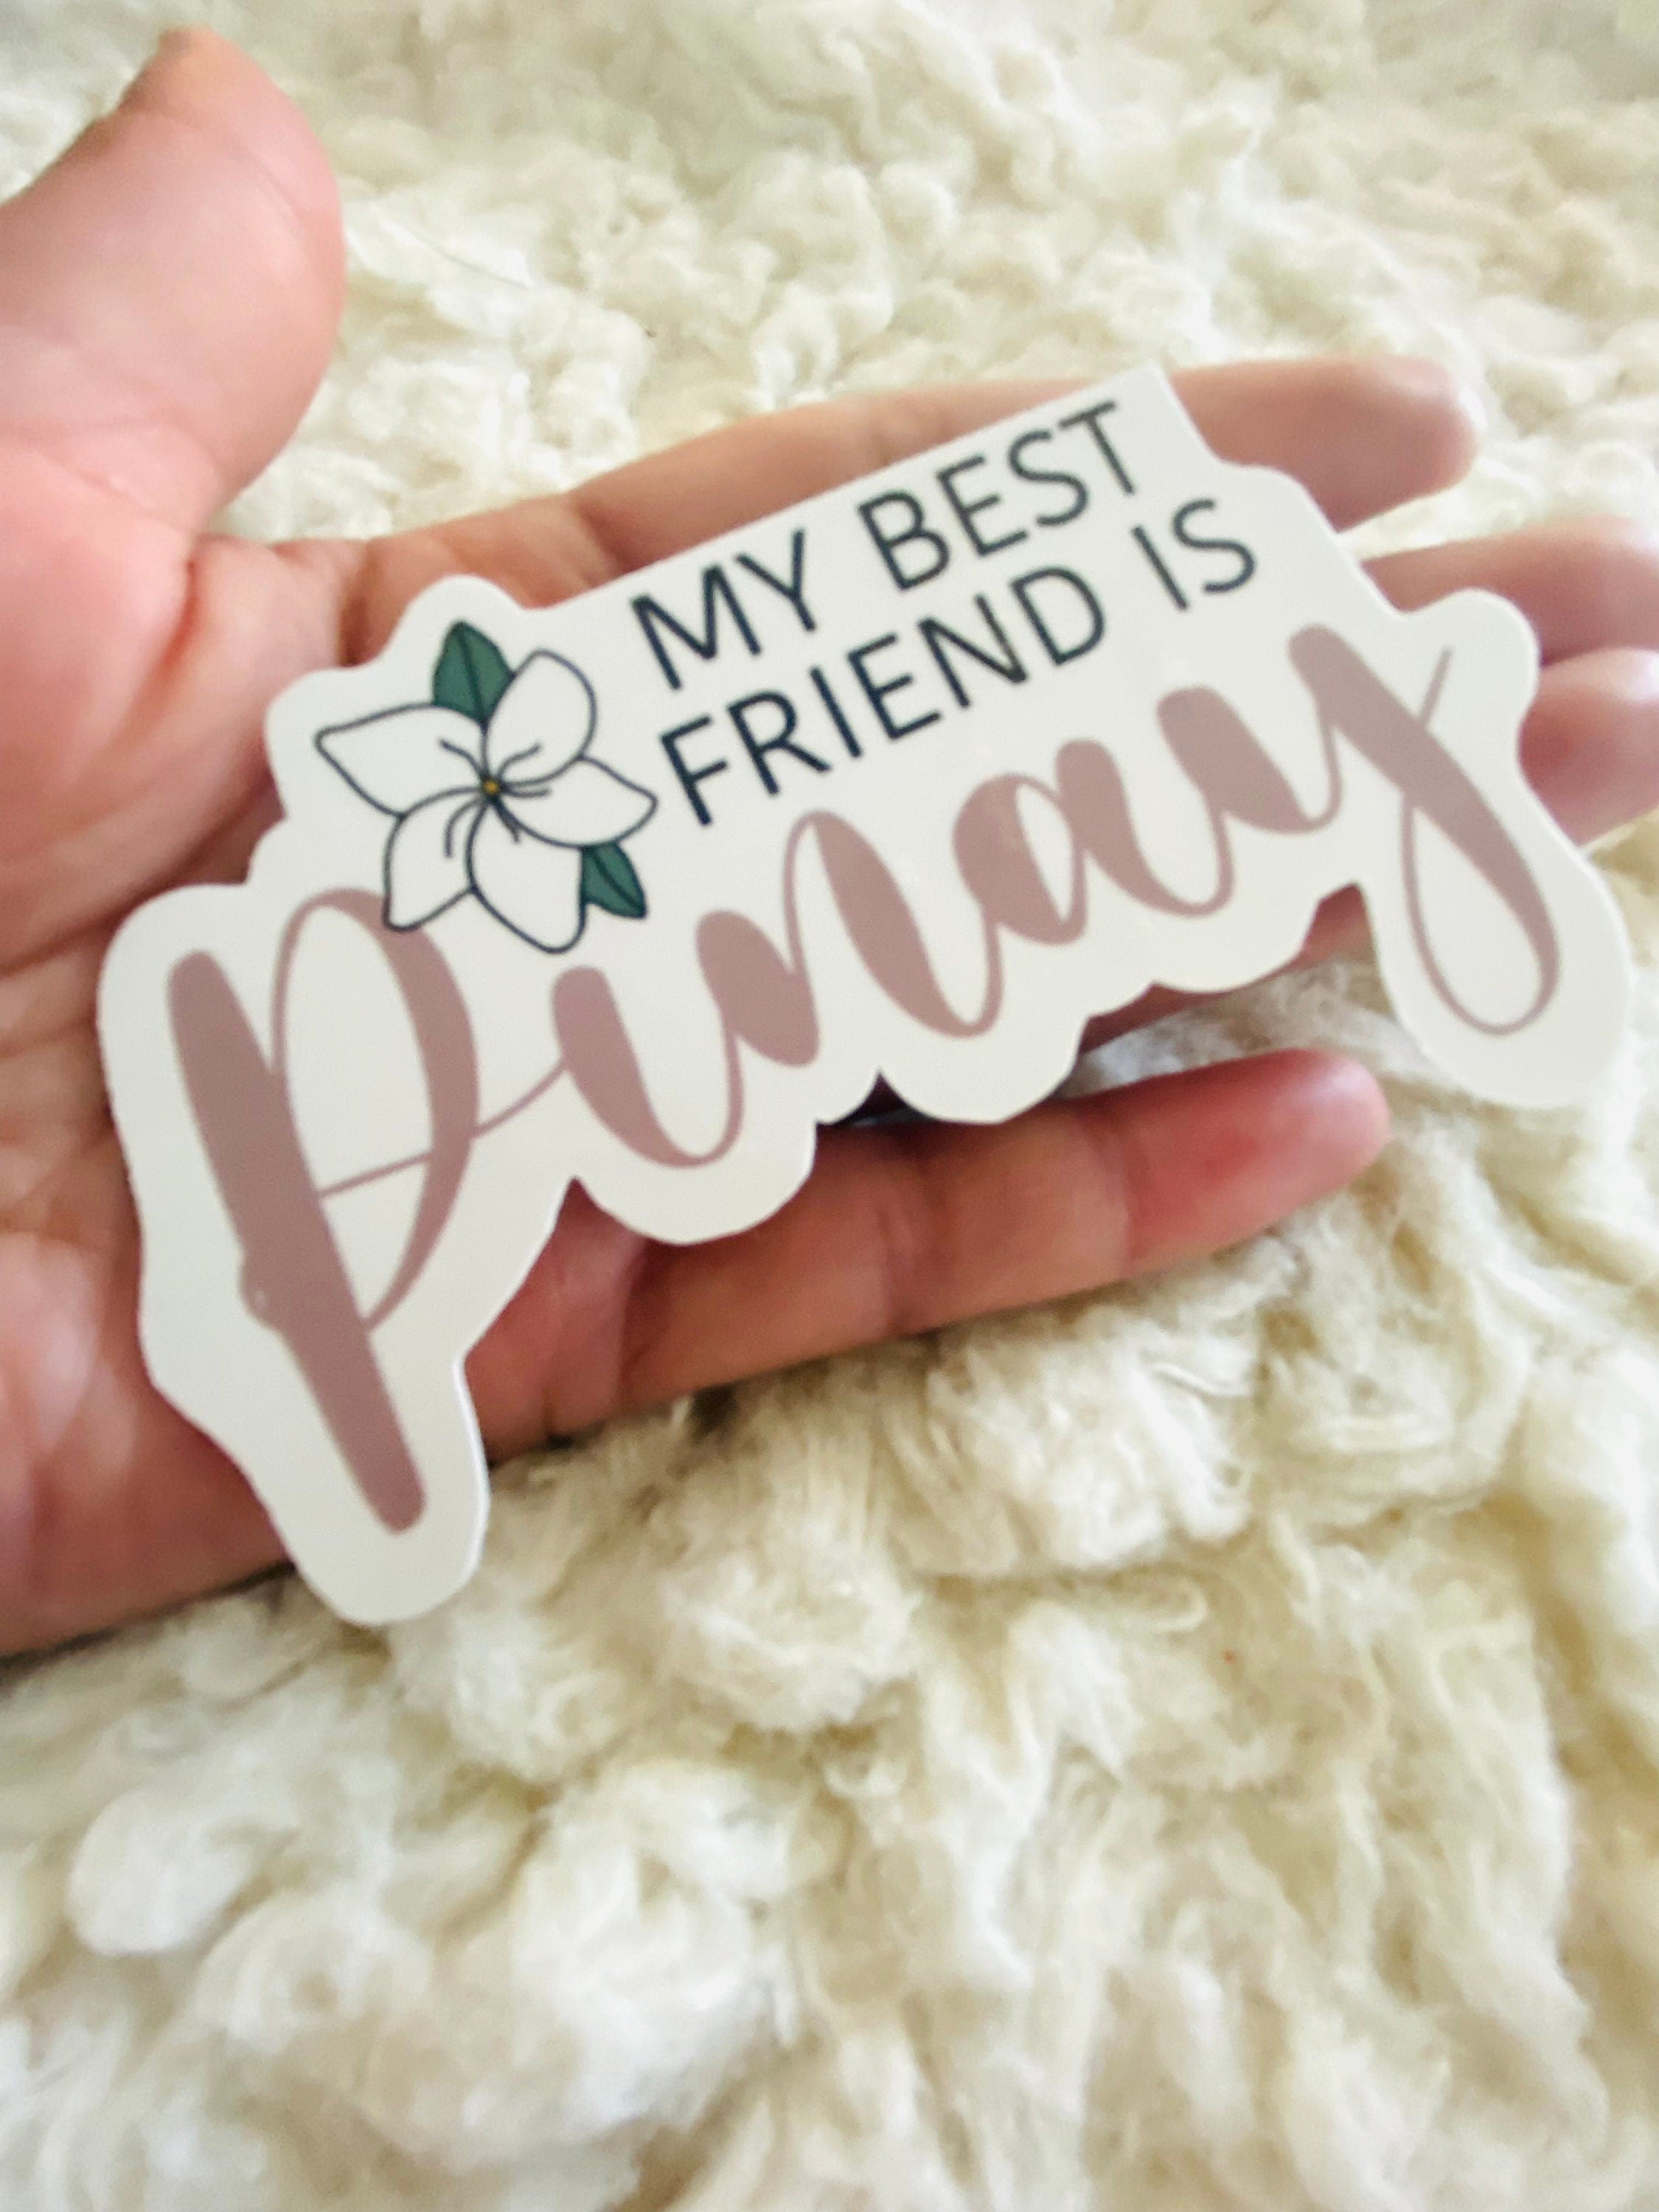 Mie Makes Pinay Sticker, Best Friend, Filipina Sticker, Sampaguita, Filipina Sticker, My Best Friend is Pinay, Philippines, Filipino, Pinay, Laptop